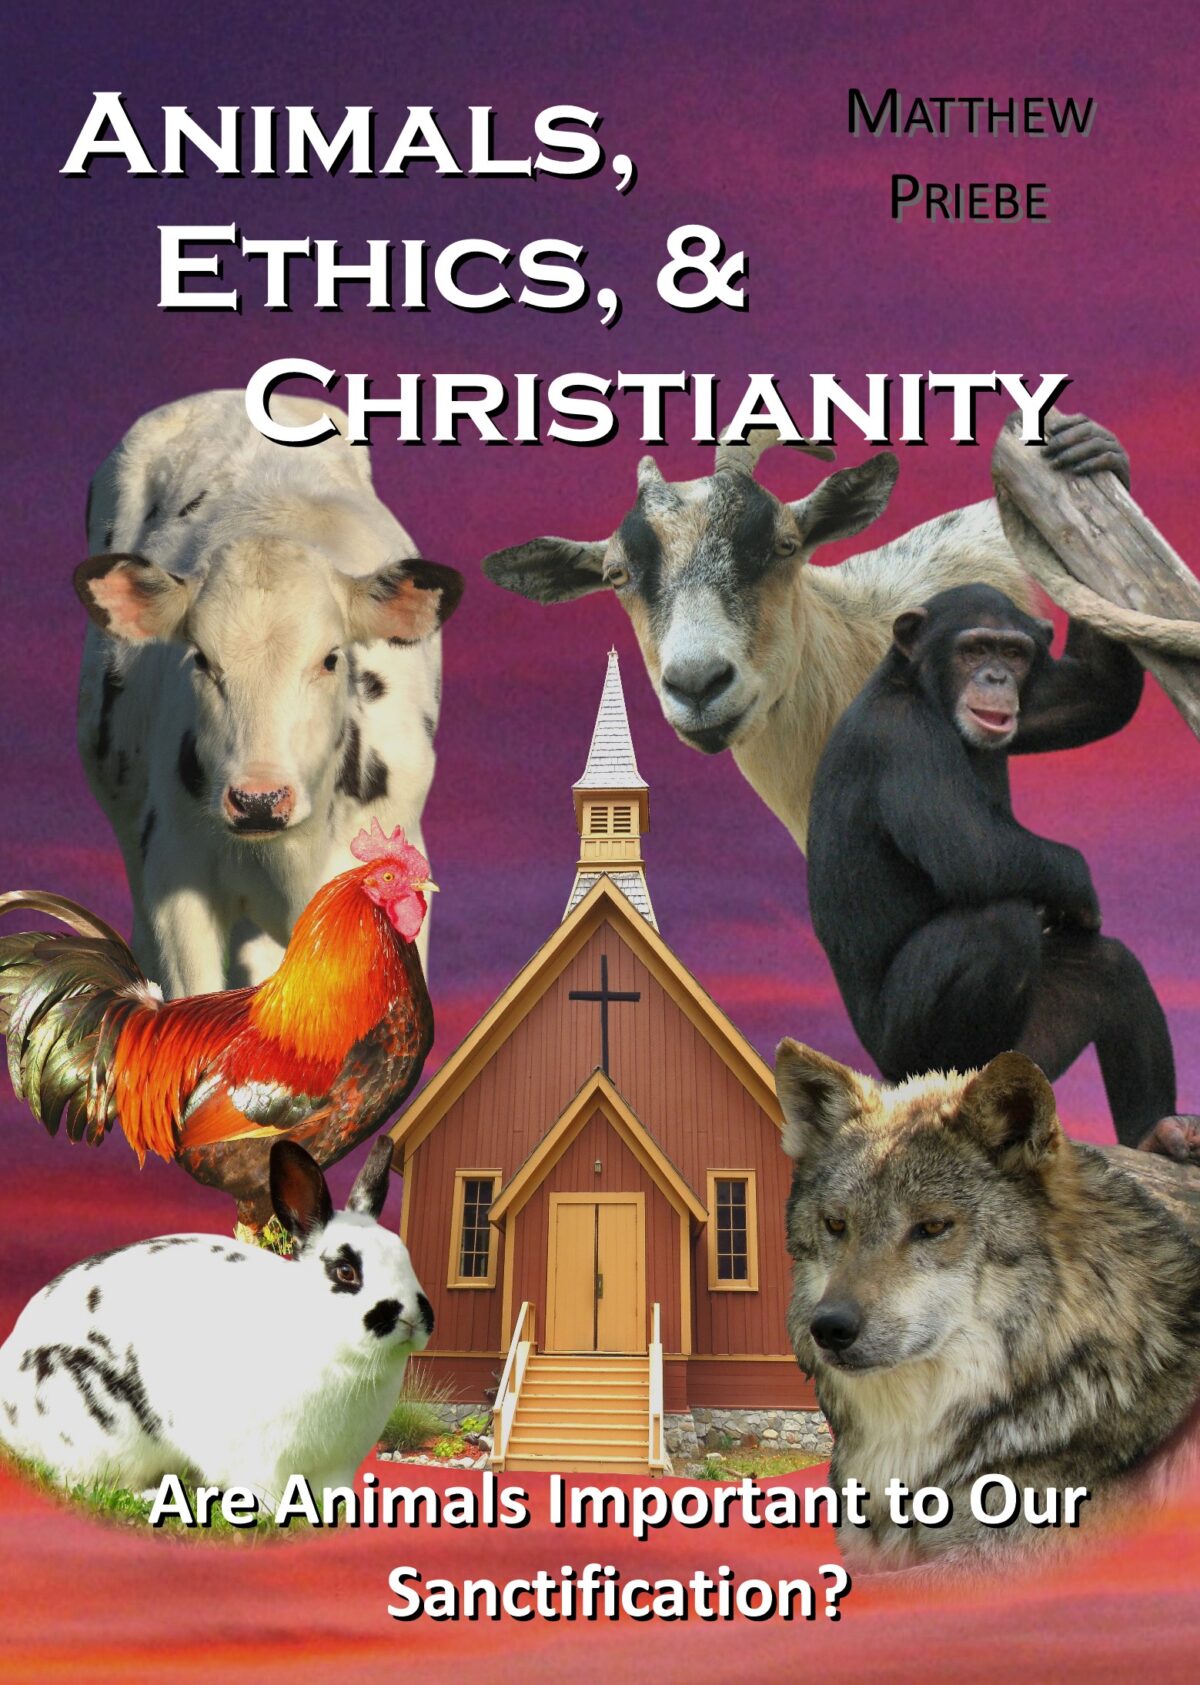 Animals, Ethics, & Christianity Video